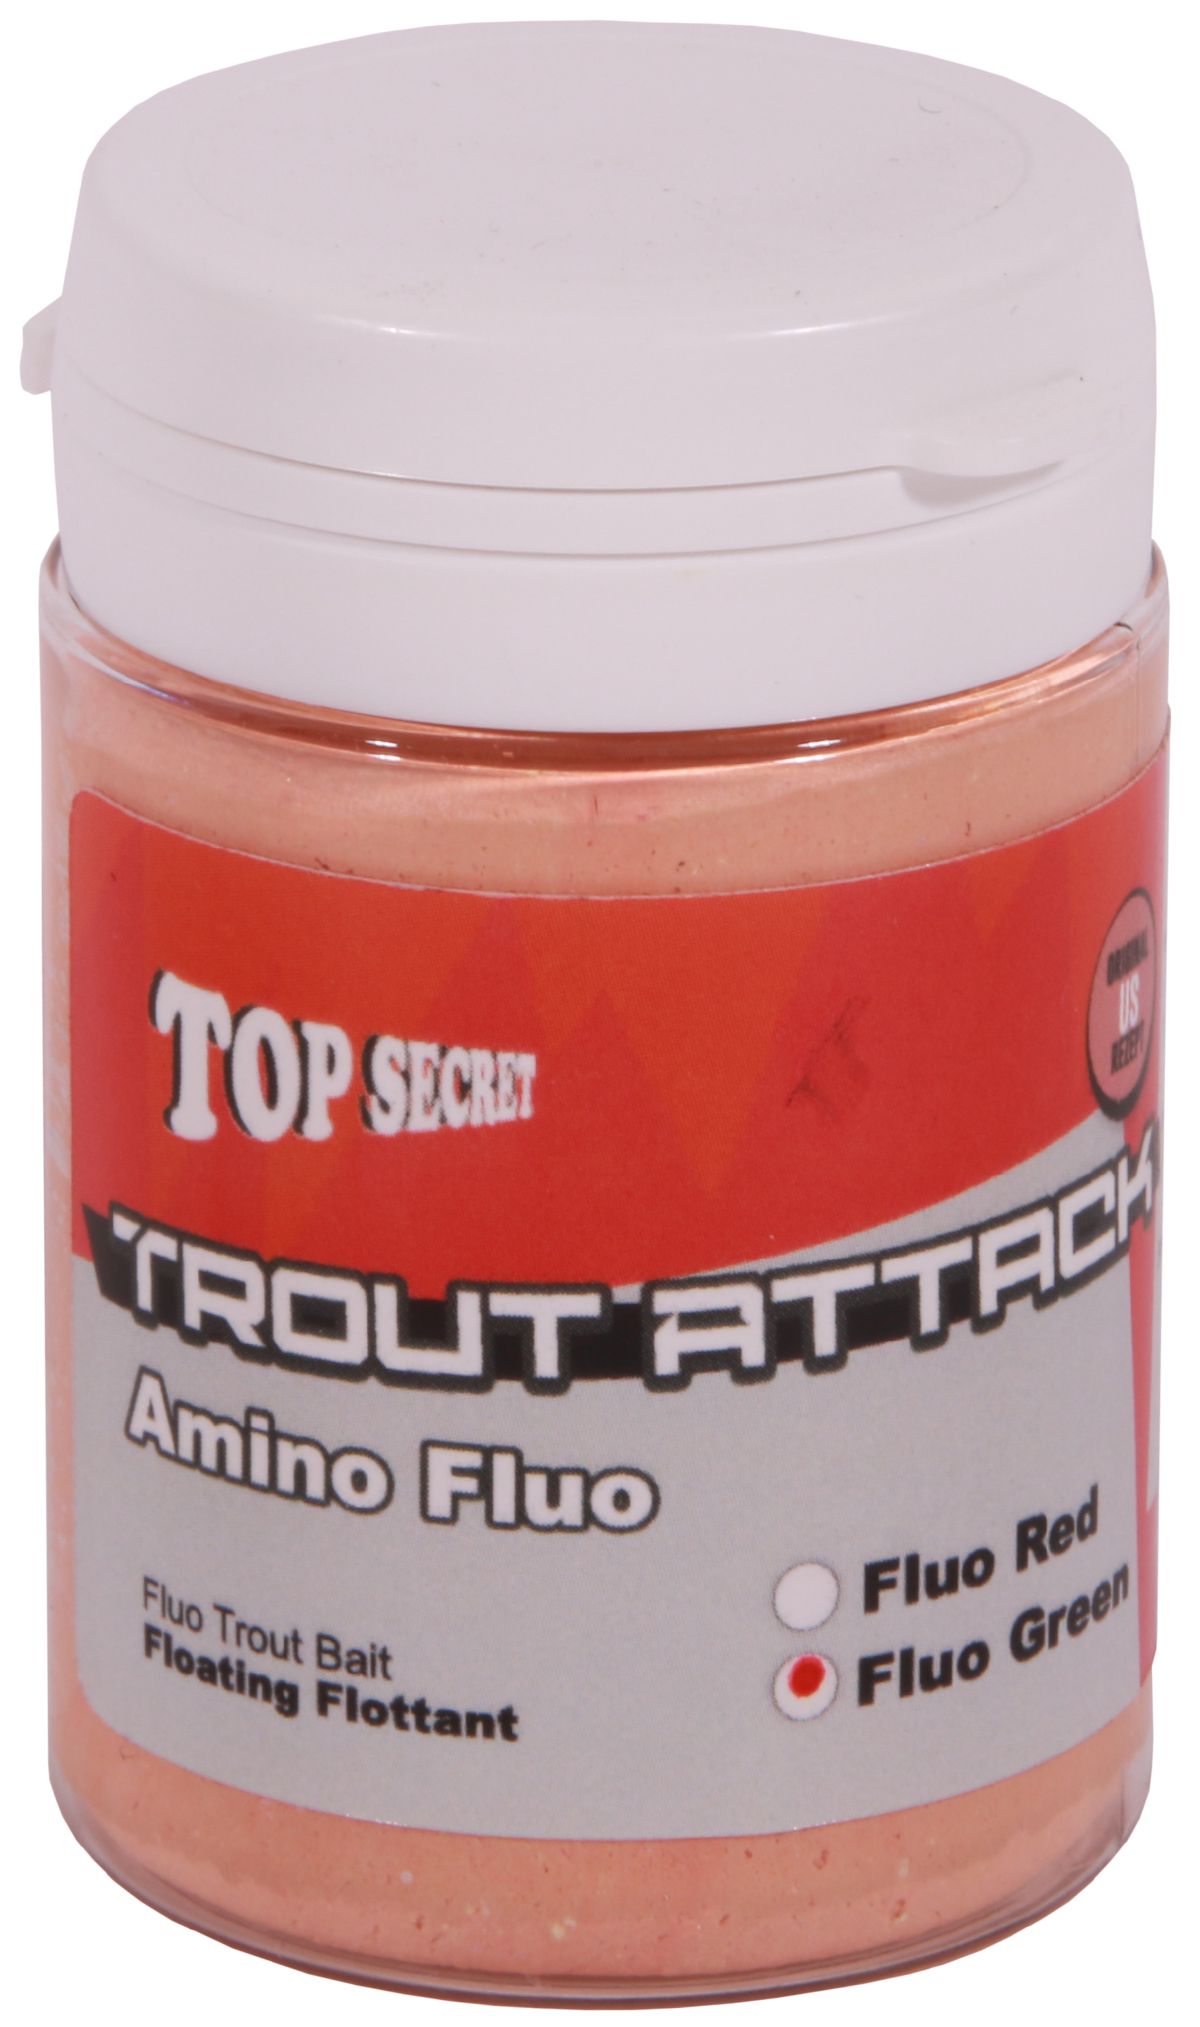 Top Secret Trout Attac Fluo 60g - Orange Green